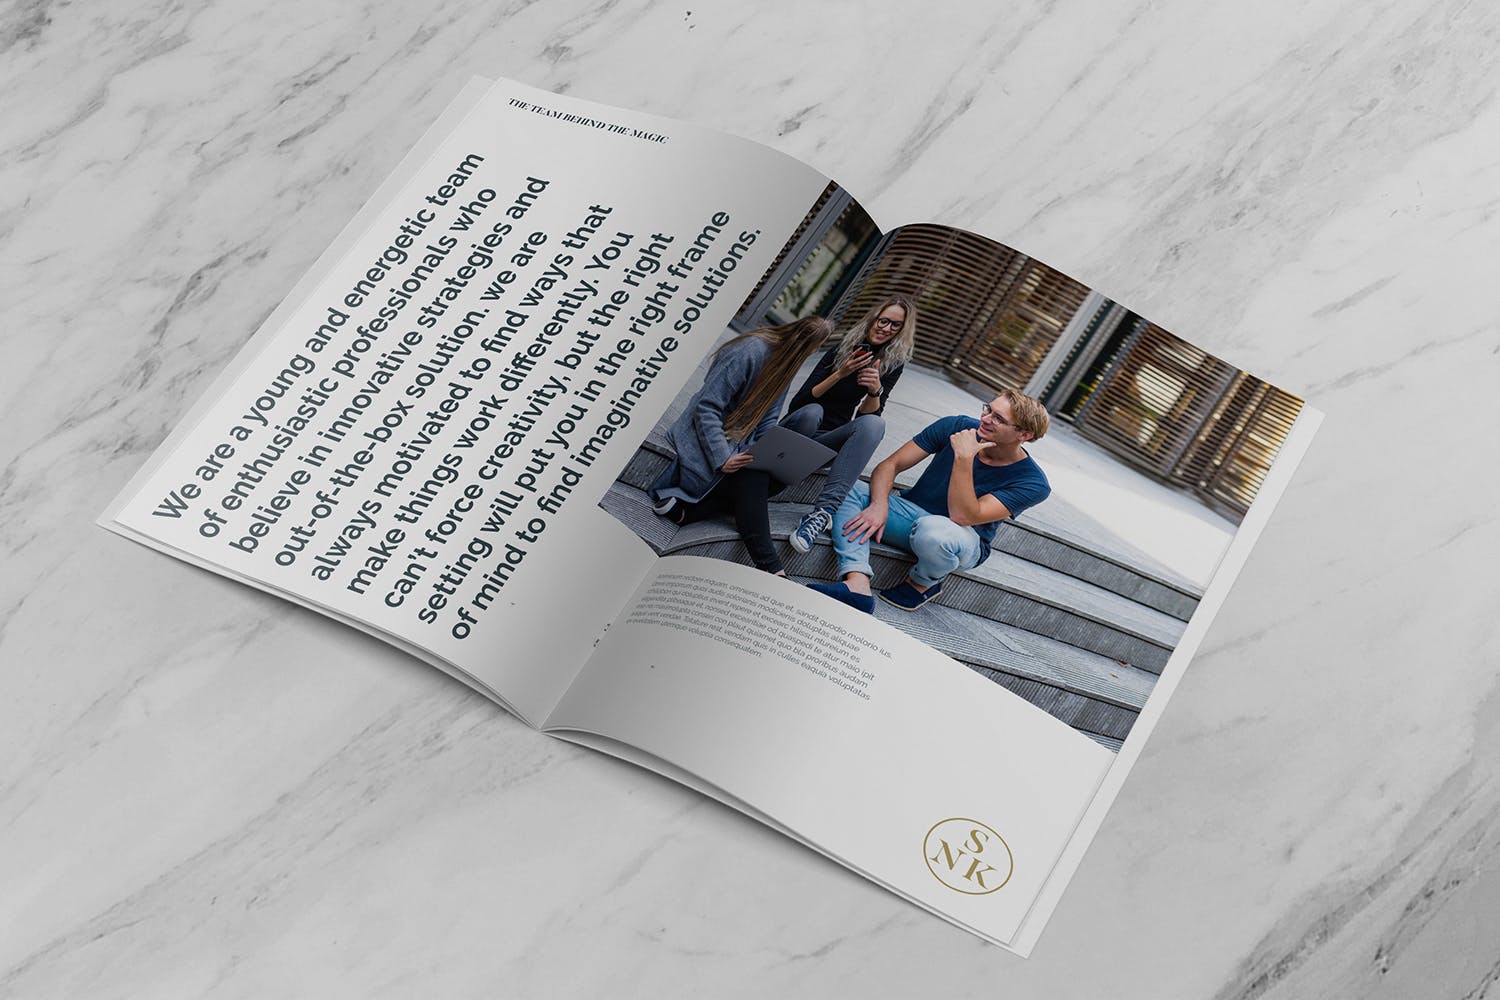 A4宣传小册子/企业画册内页排版设计效果图样机非凡图库精选 A4 Brochure Mockup Open Pages插图(2)